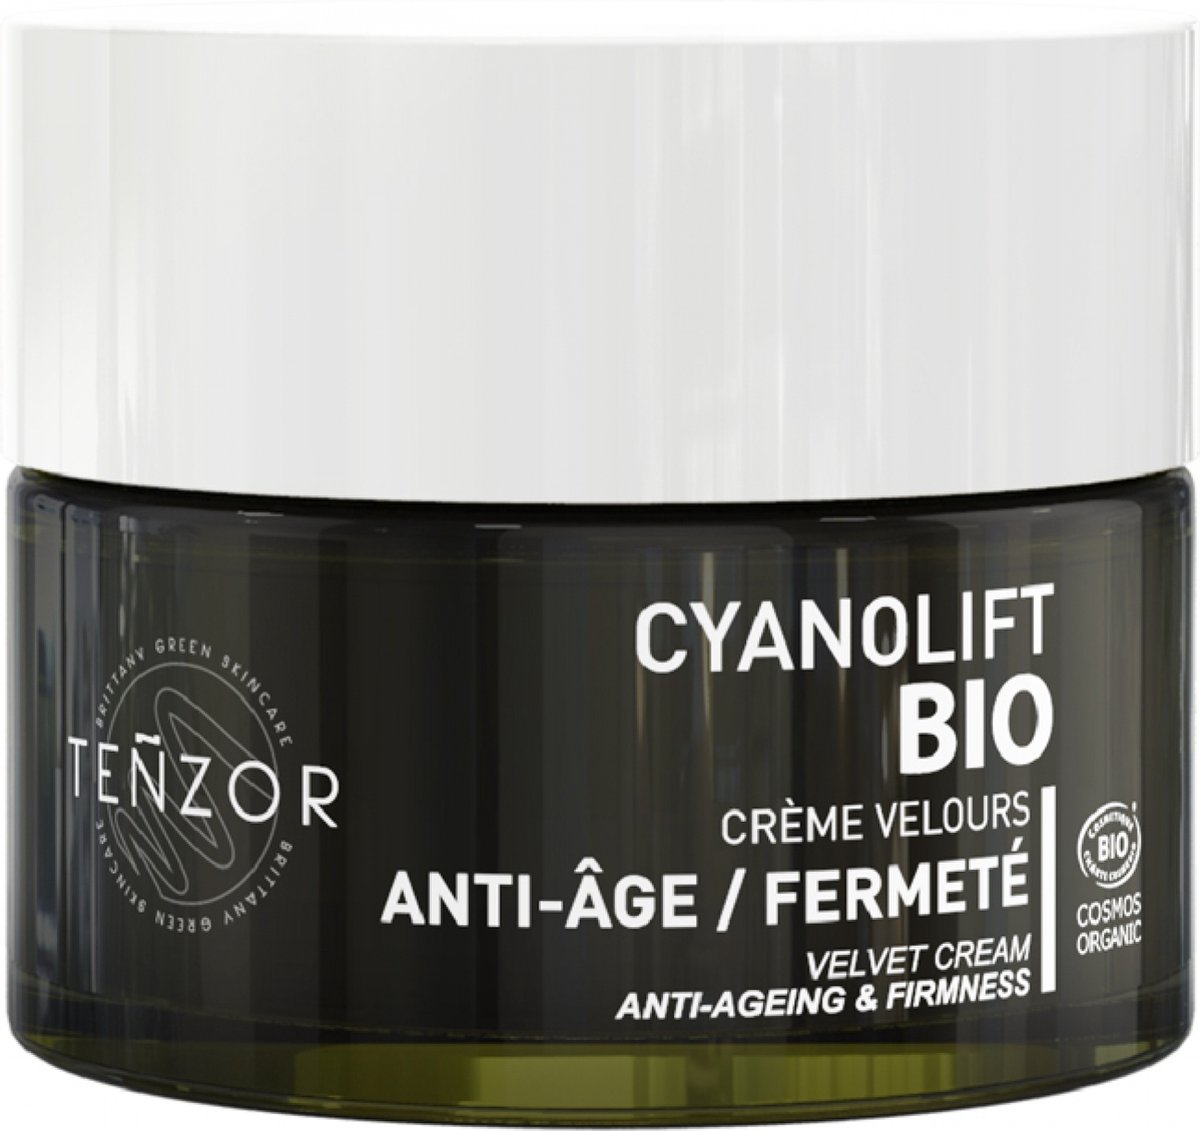 Teñzor Cyanolift Bio Velvet Anti-Ageing / Verstevigende Crème 50 ml